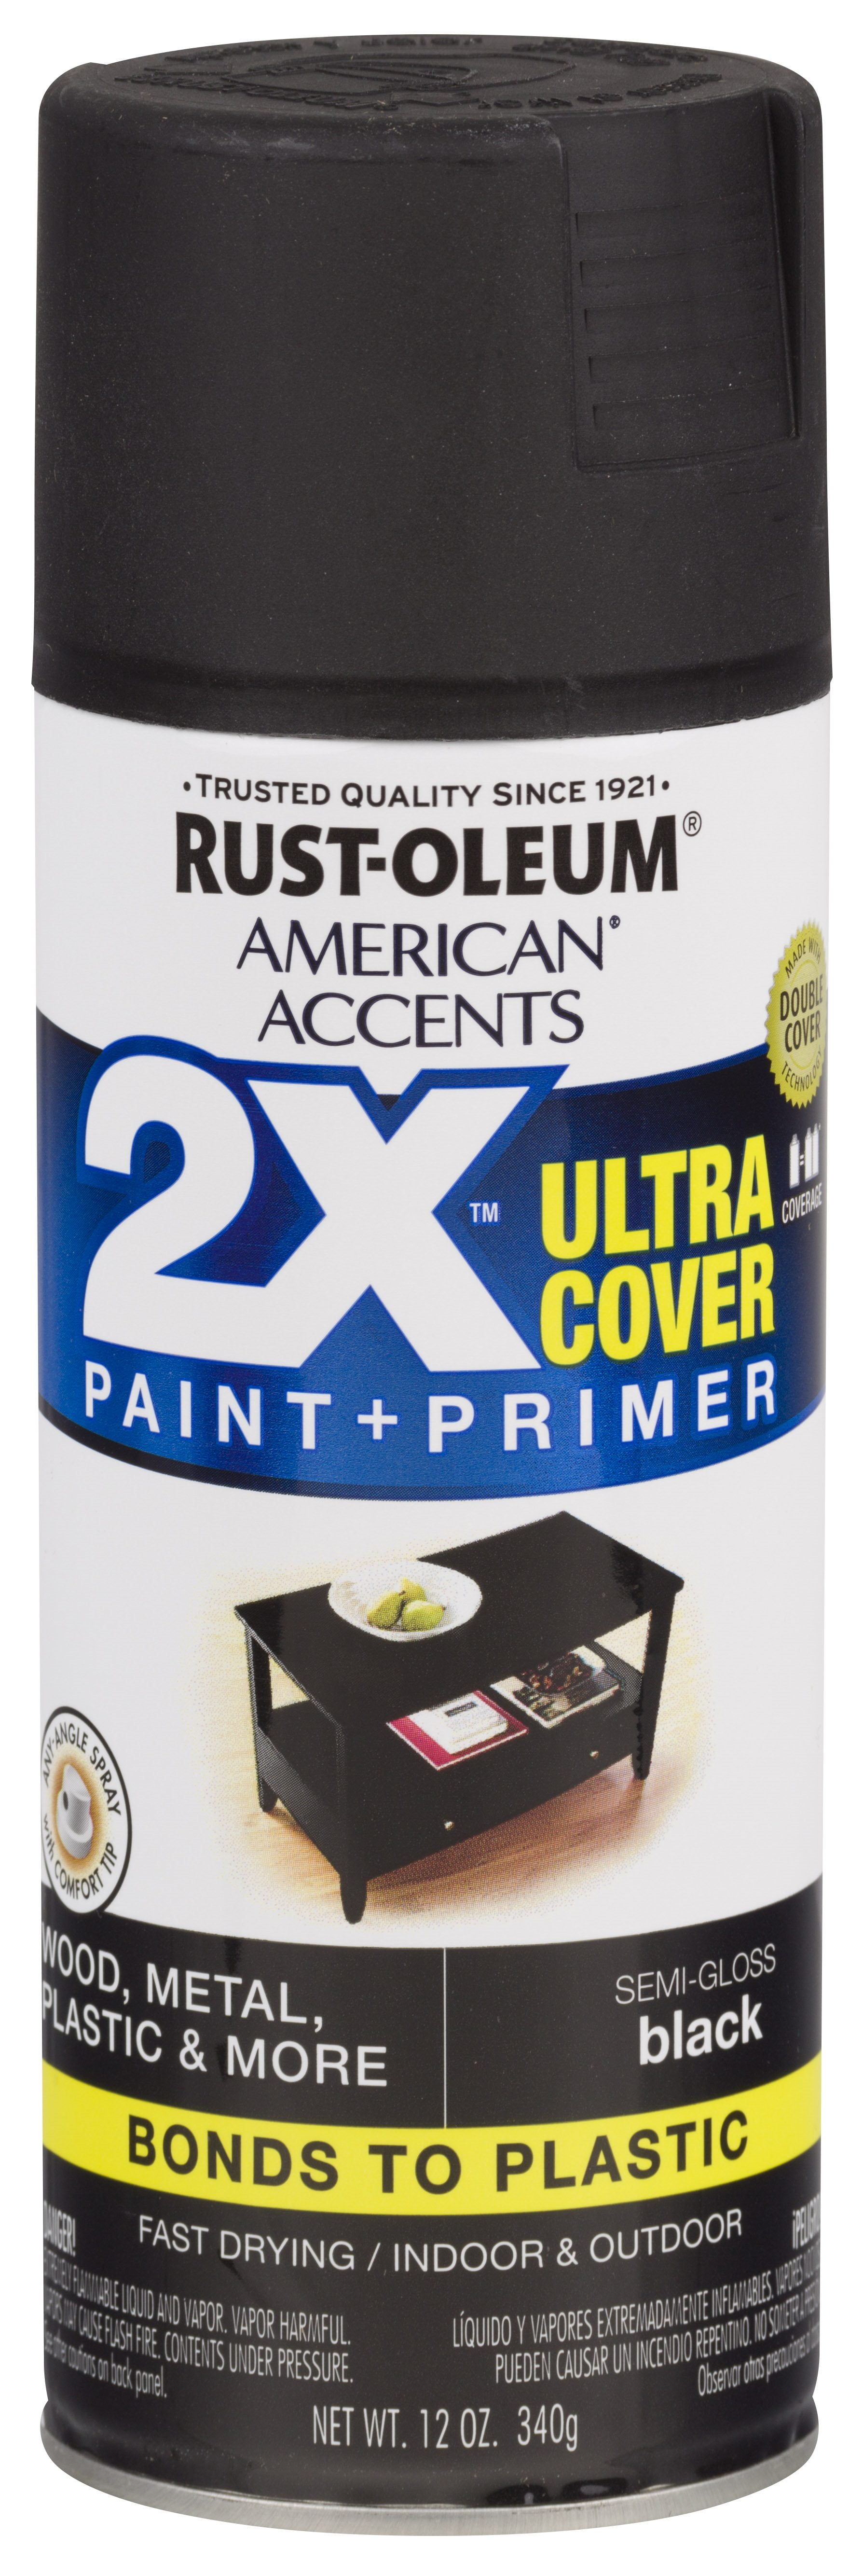 rust oleum spray paint ultra cover